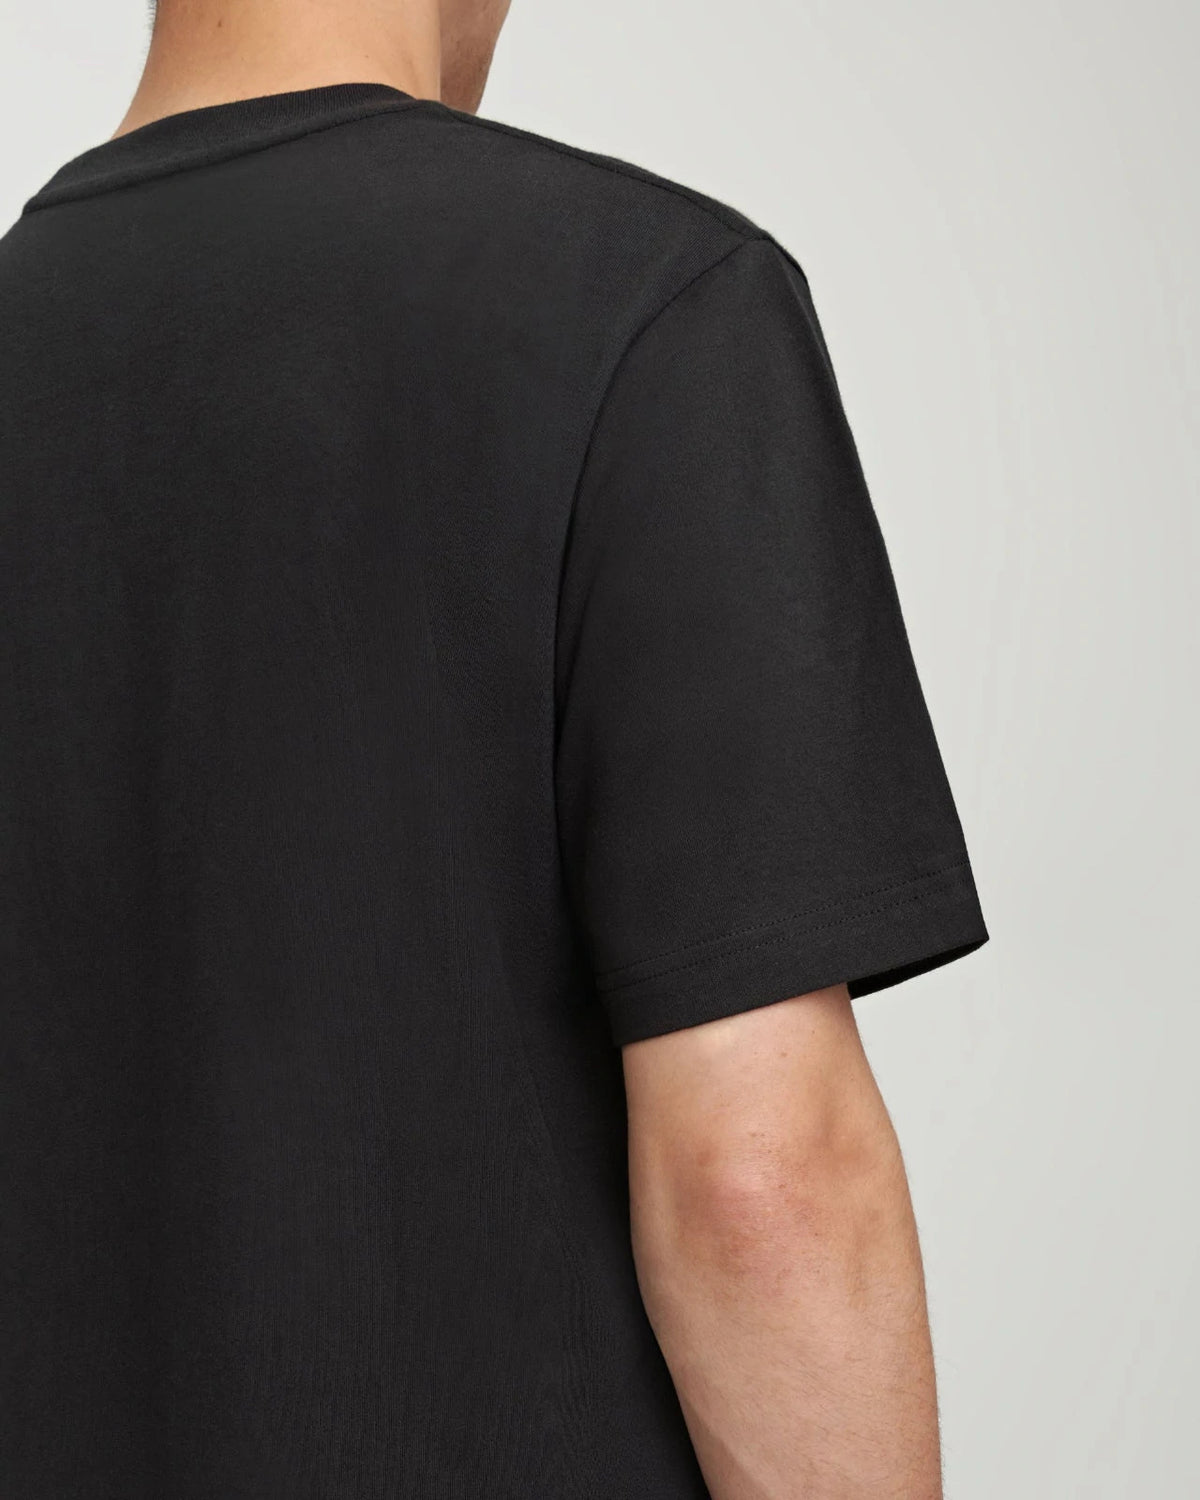 MAAP Evade Black サイクル Tシャツ | CYCLISM